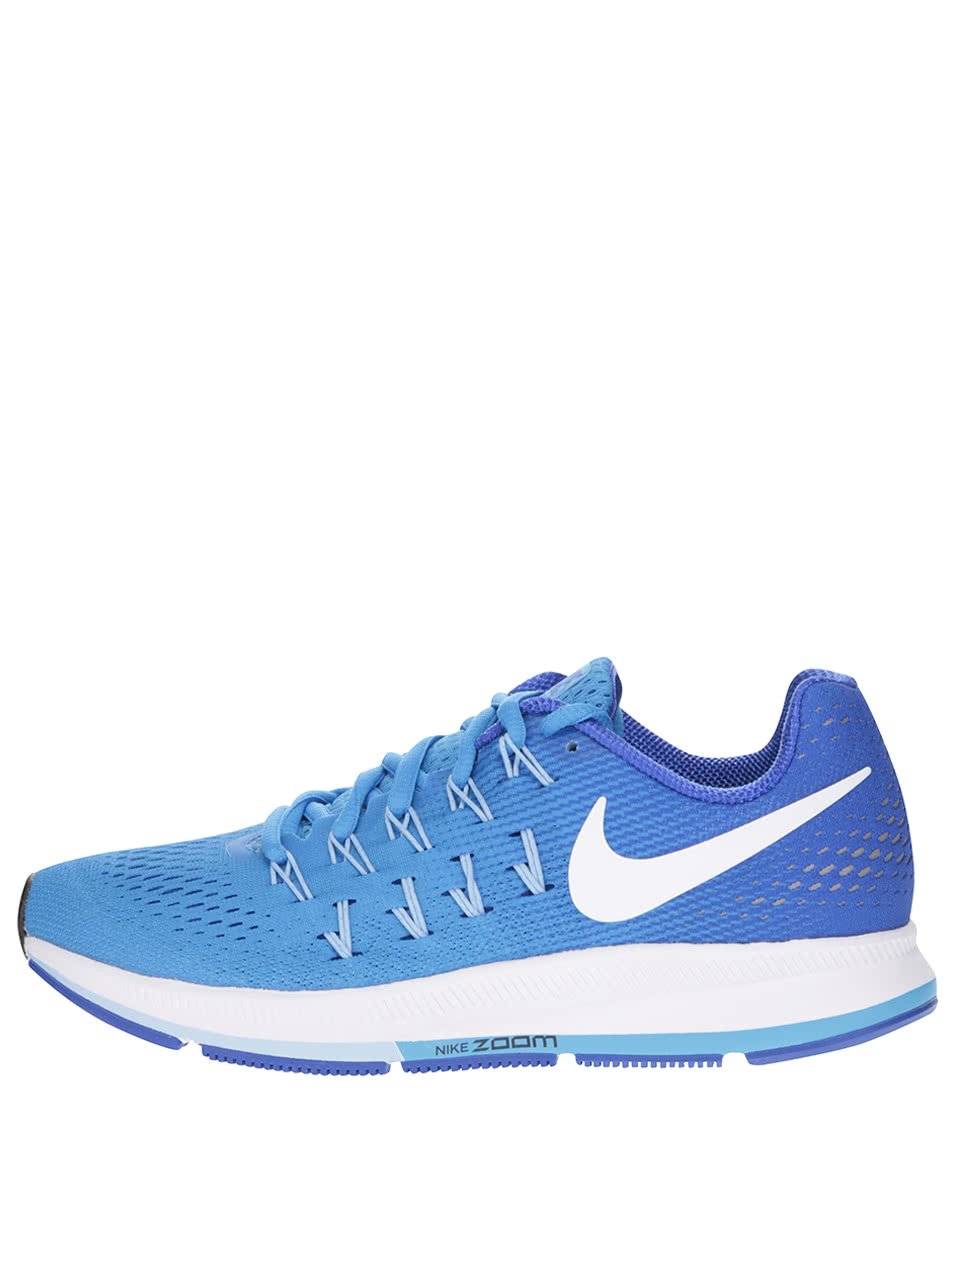 Modro-bílé dámské tenisky Nike Air Zoom Pegasus 33